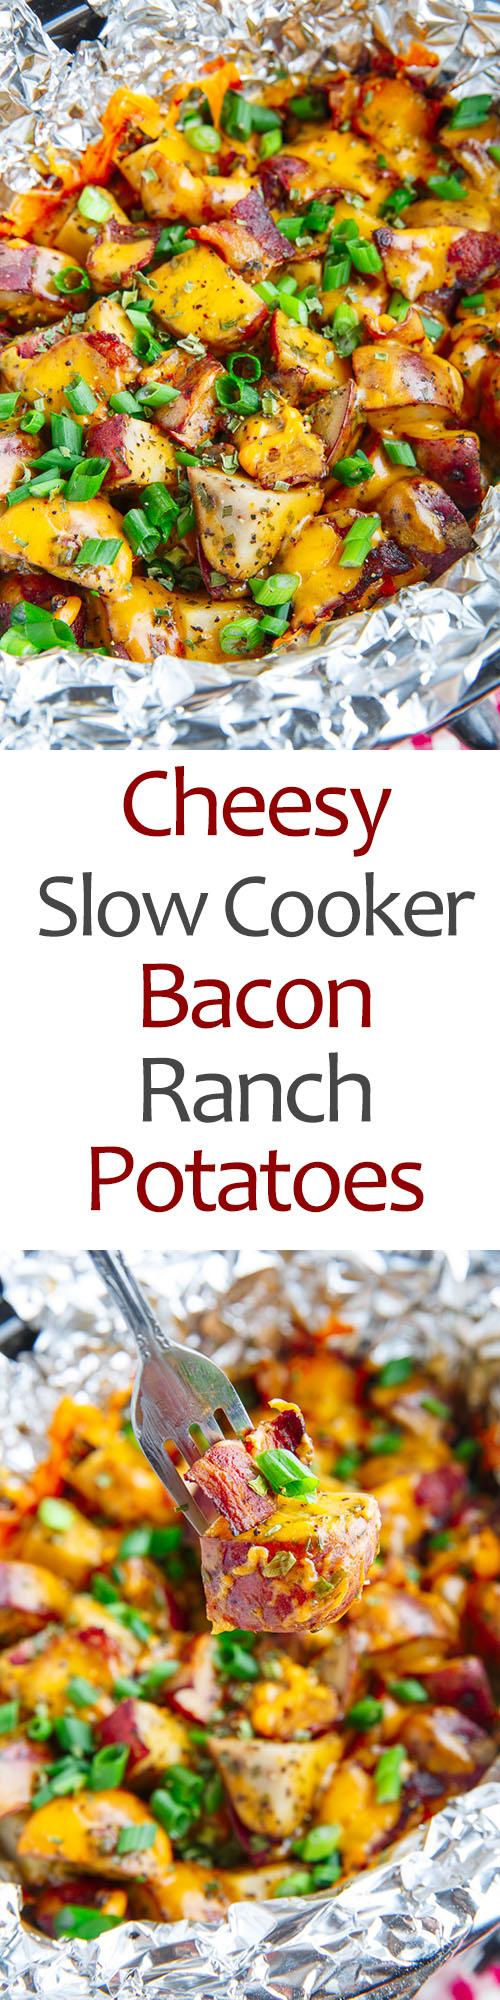 Cheesy Slow Cooker Bacon Ranch Potatoes